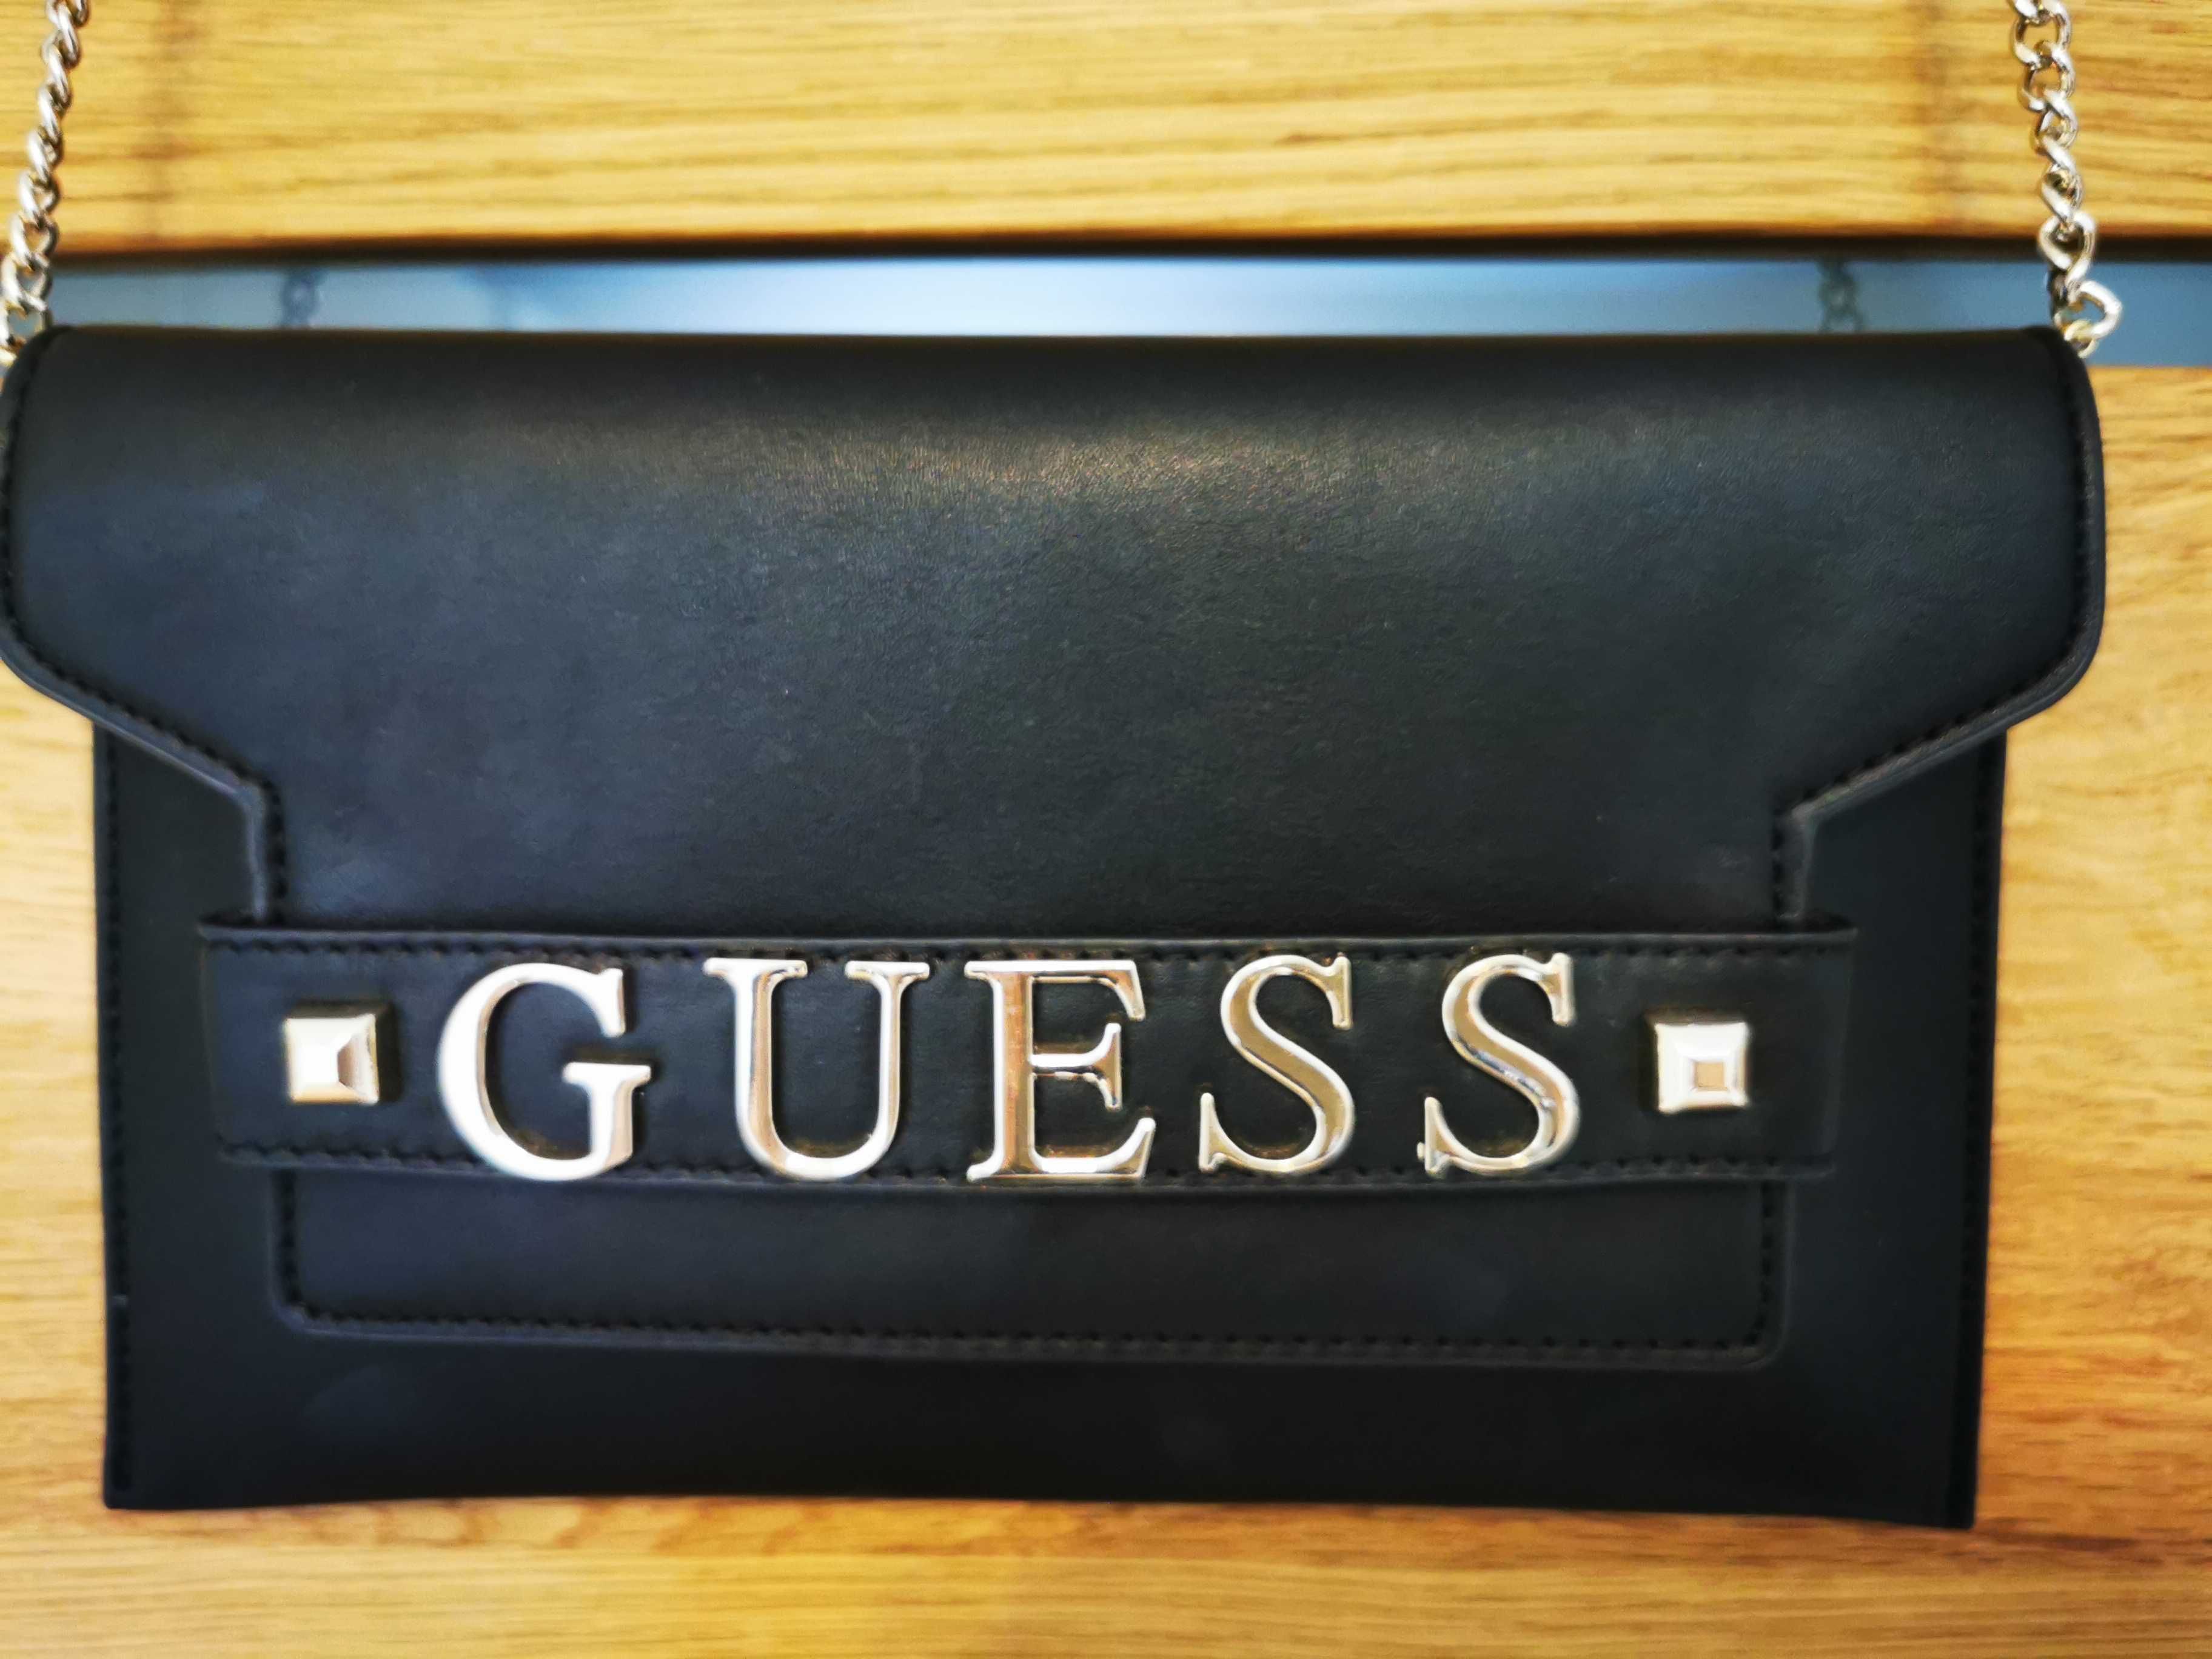 Torebka kopertówka nowa marki Guess, złote dodatki, odpinany pasek.